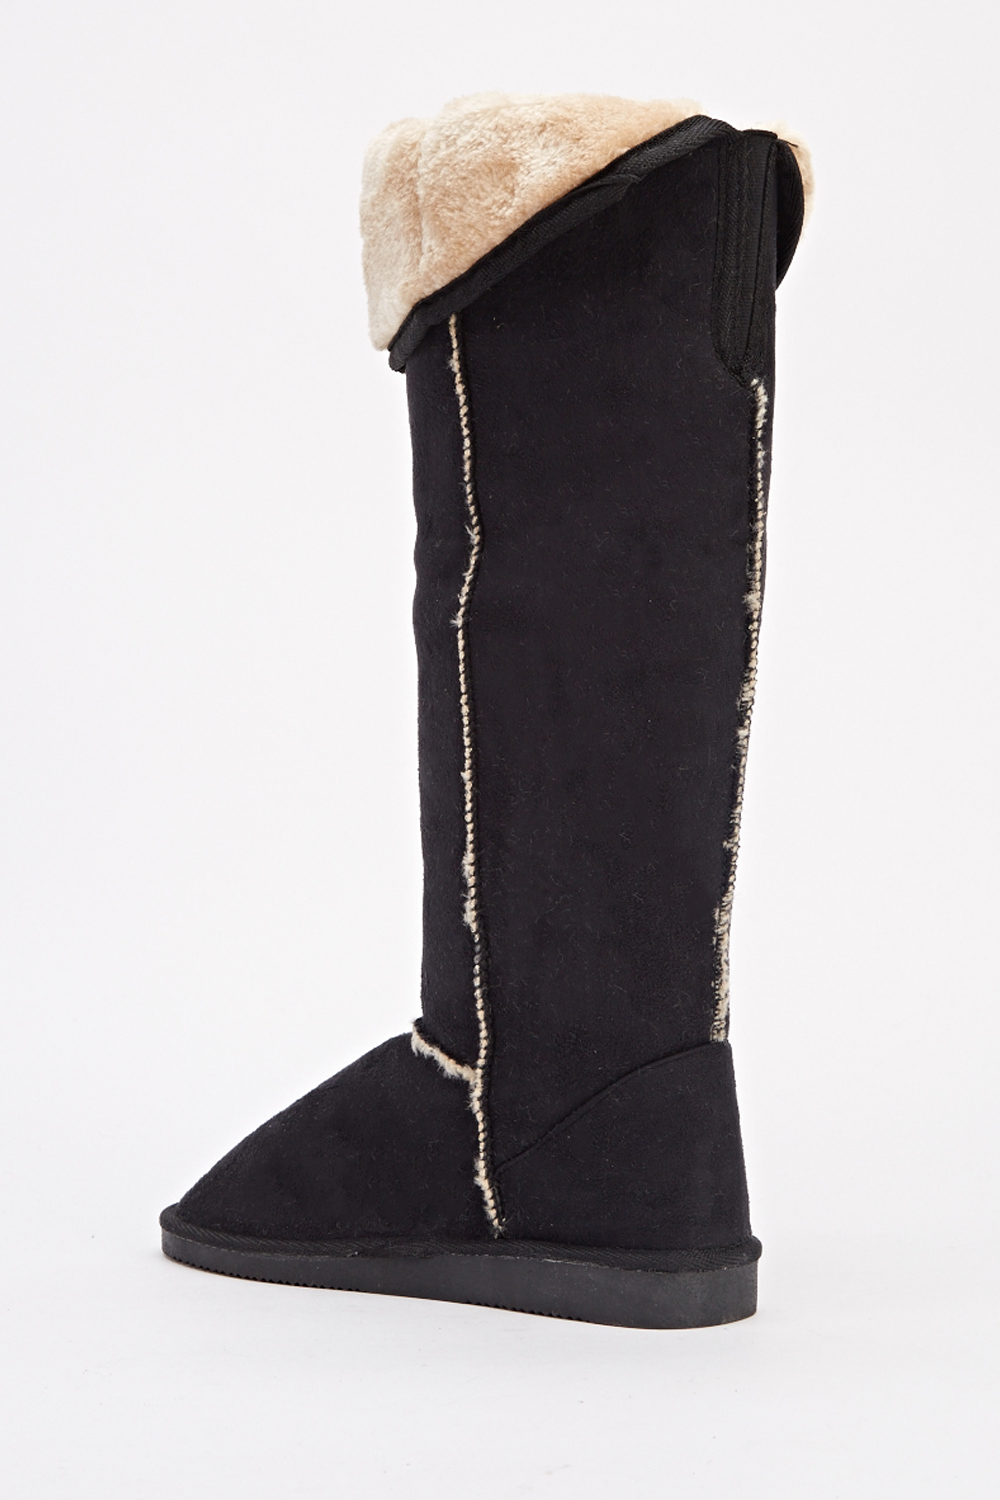 Faux Fur Trim Knee High Boots - Just $6